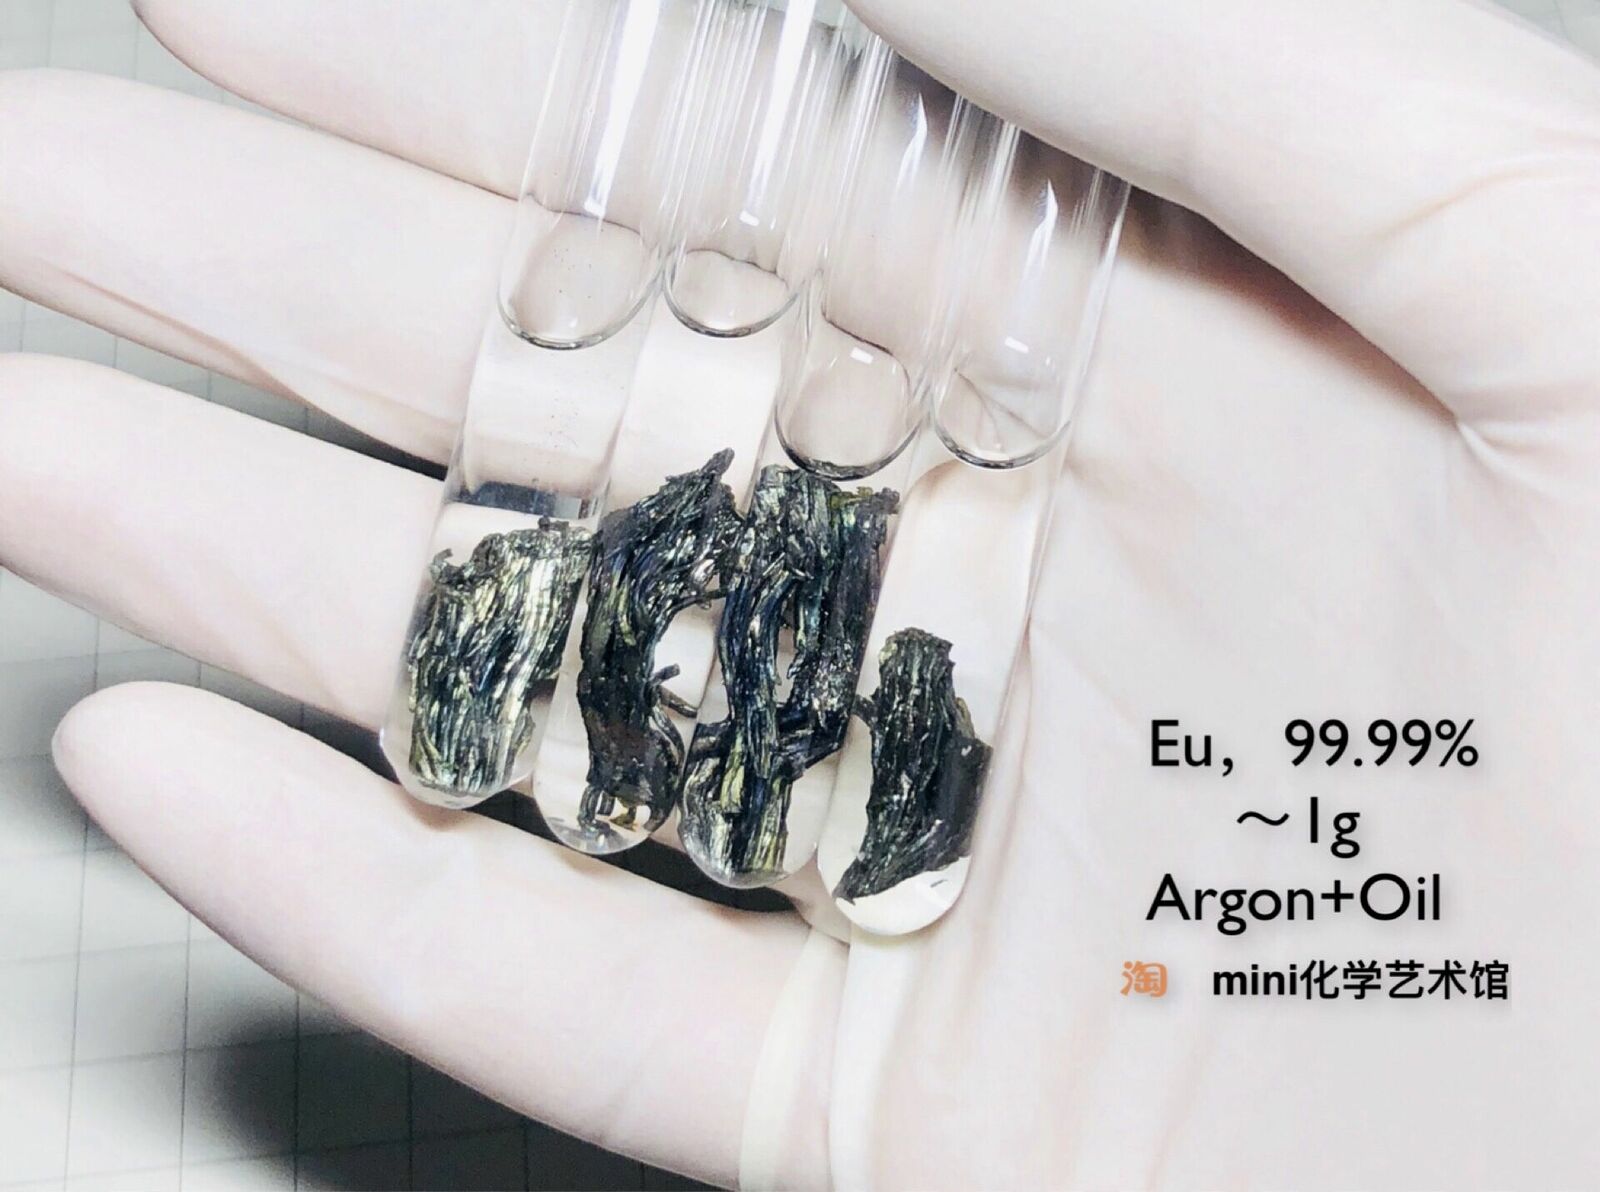 1g Pure Distilled Europium Eu Element Metal Crystal in Argon + Oil Glass Ampoule